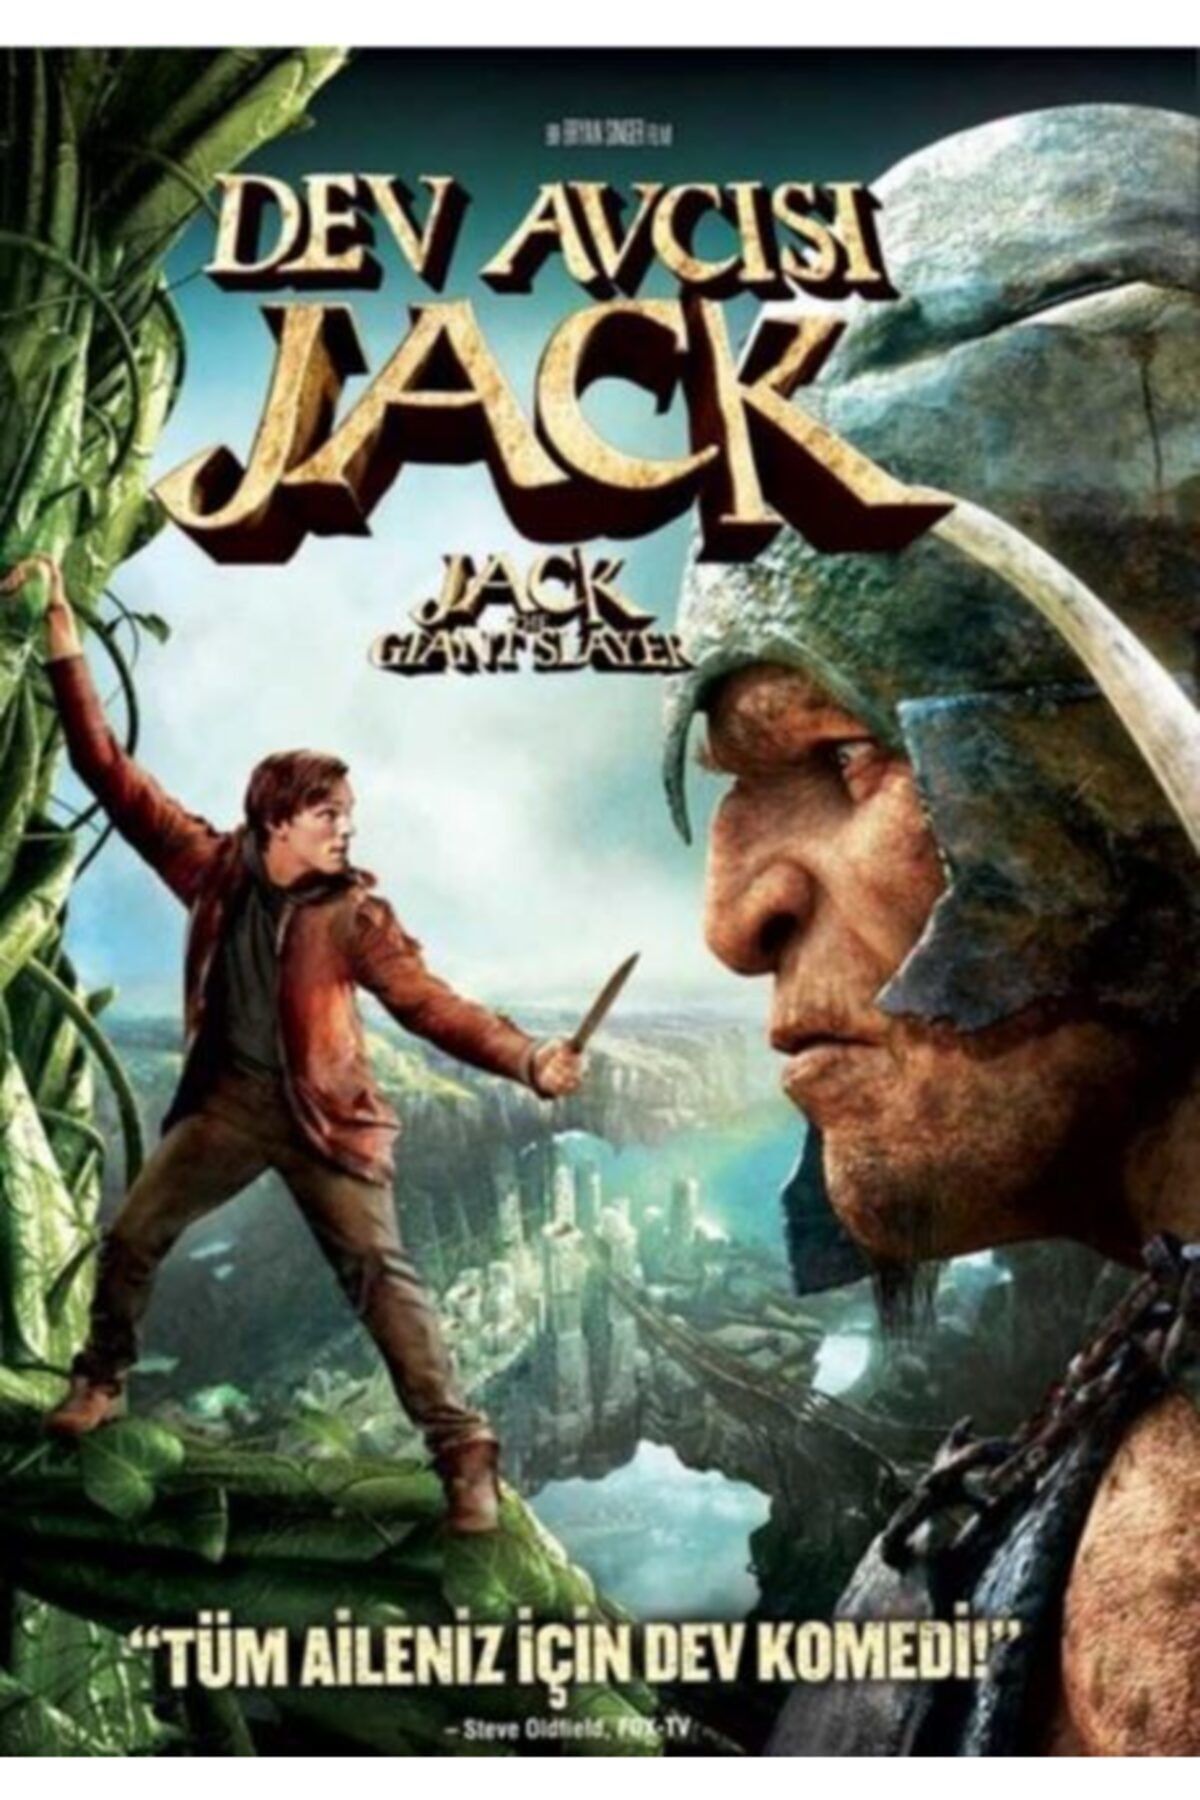 Warner Bros Jack The Giant Slayer (dev Avcısı Jack) Dvd